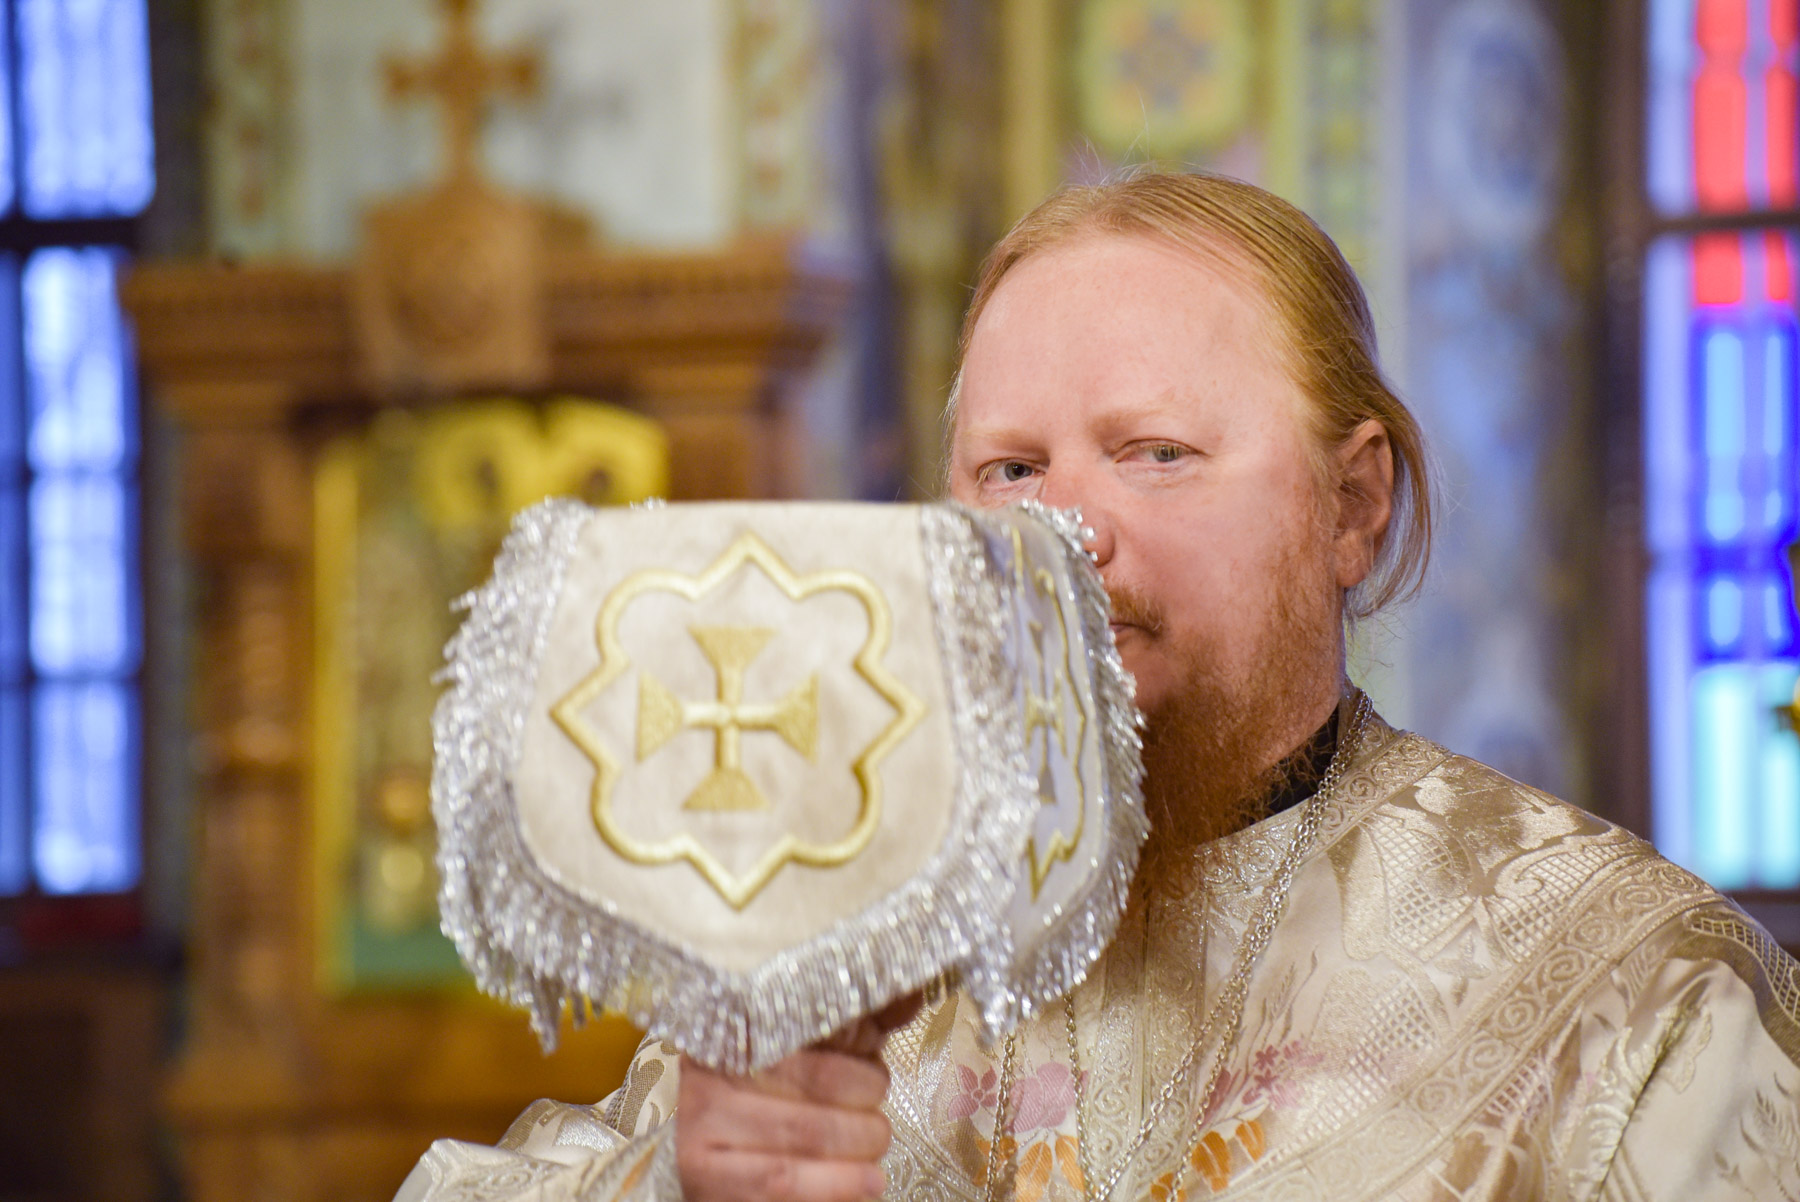 photos of orthodox christmas 0066 1